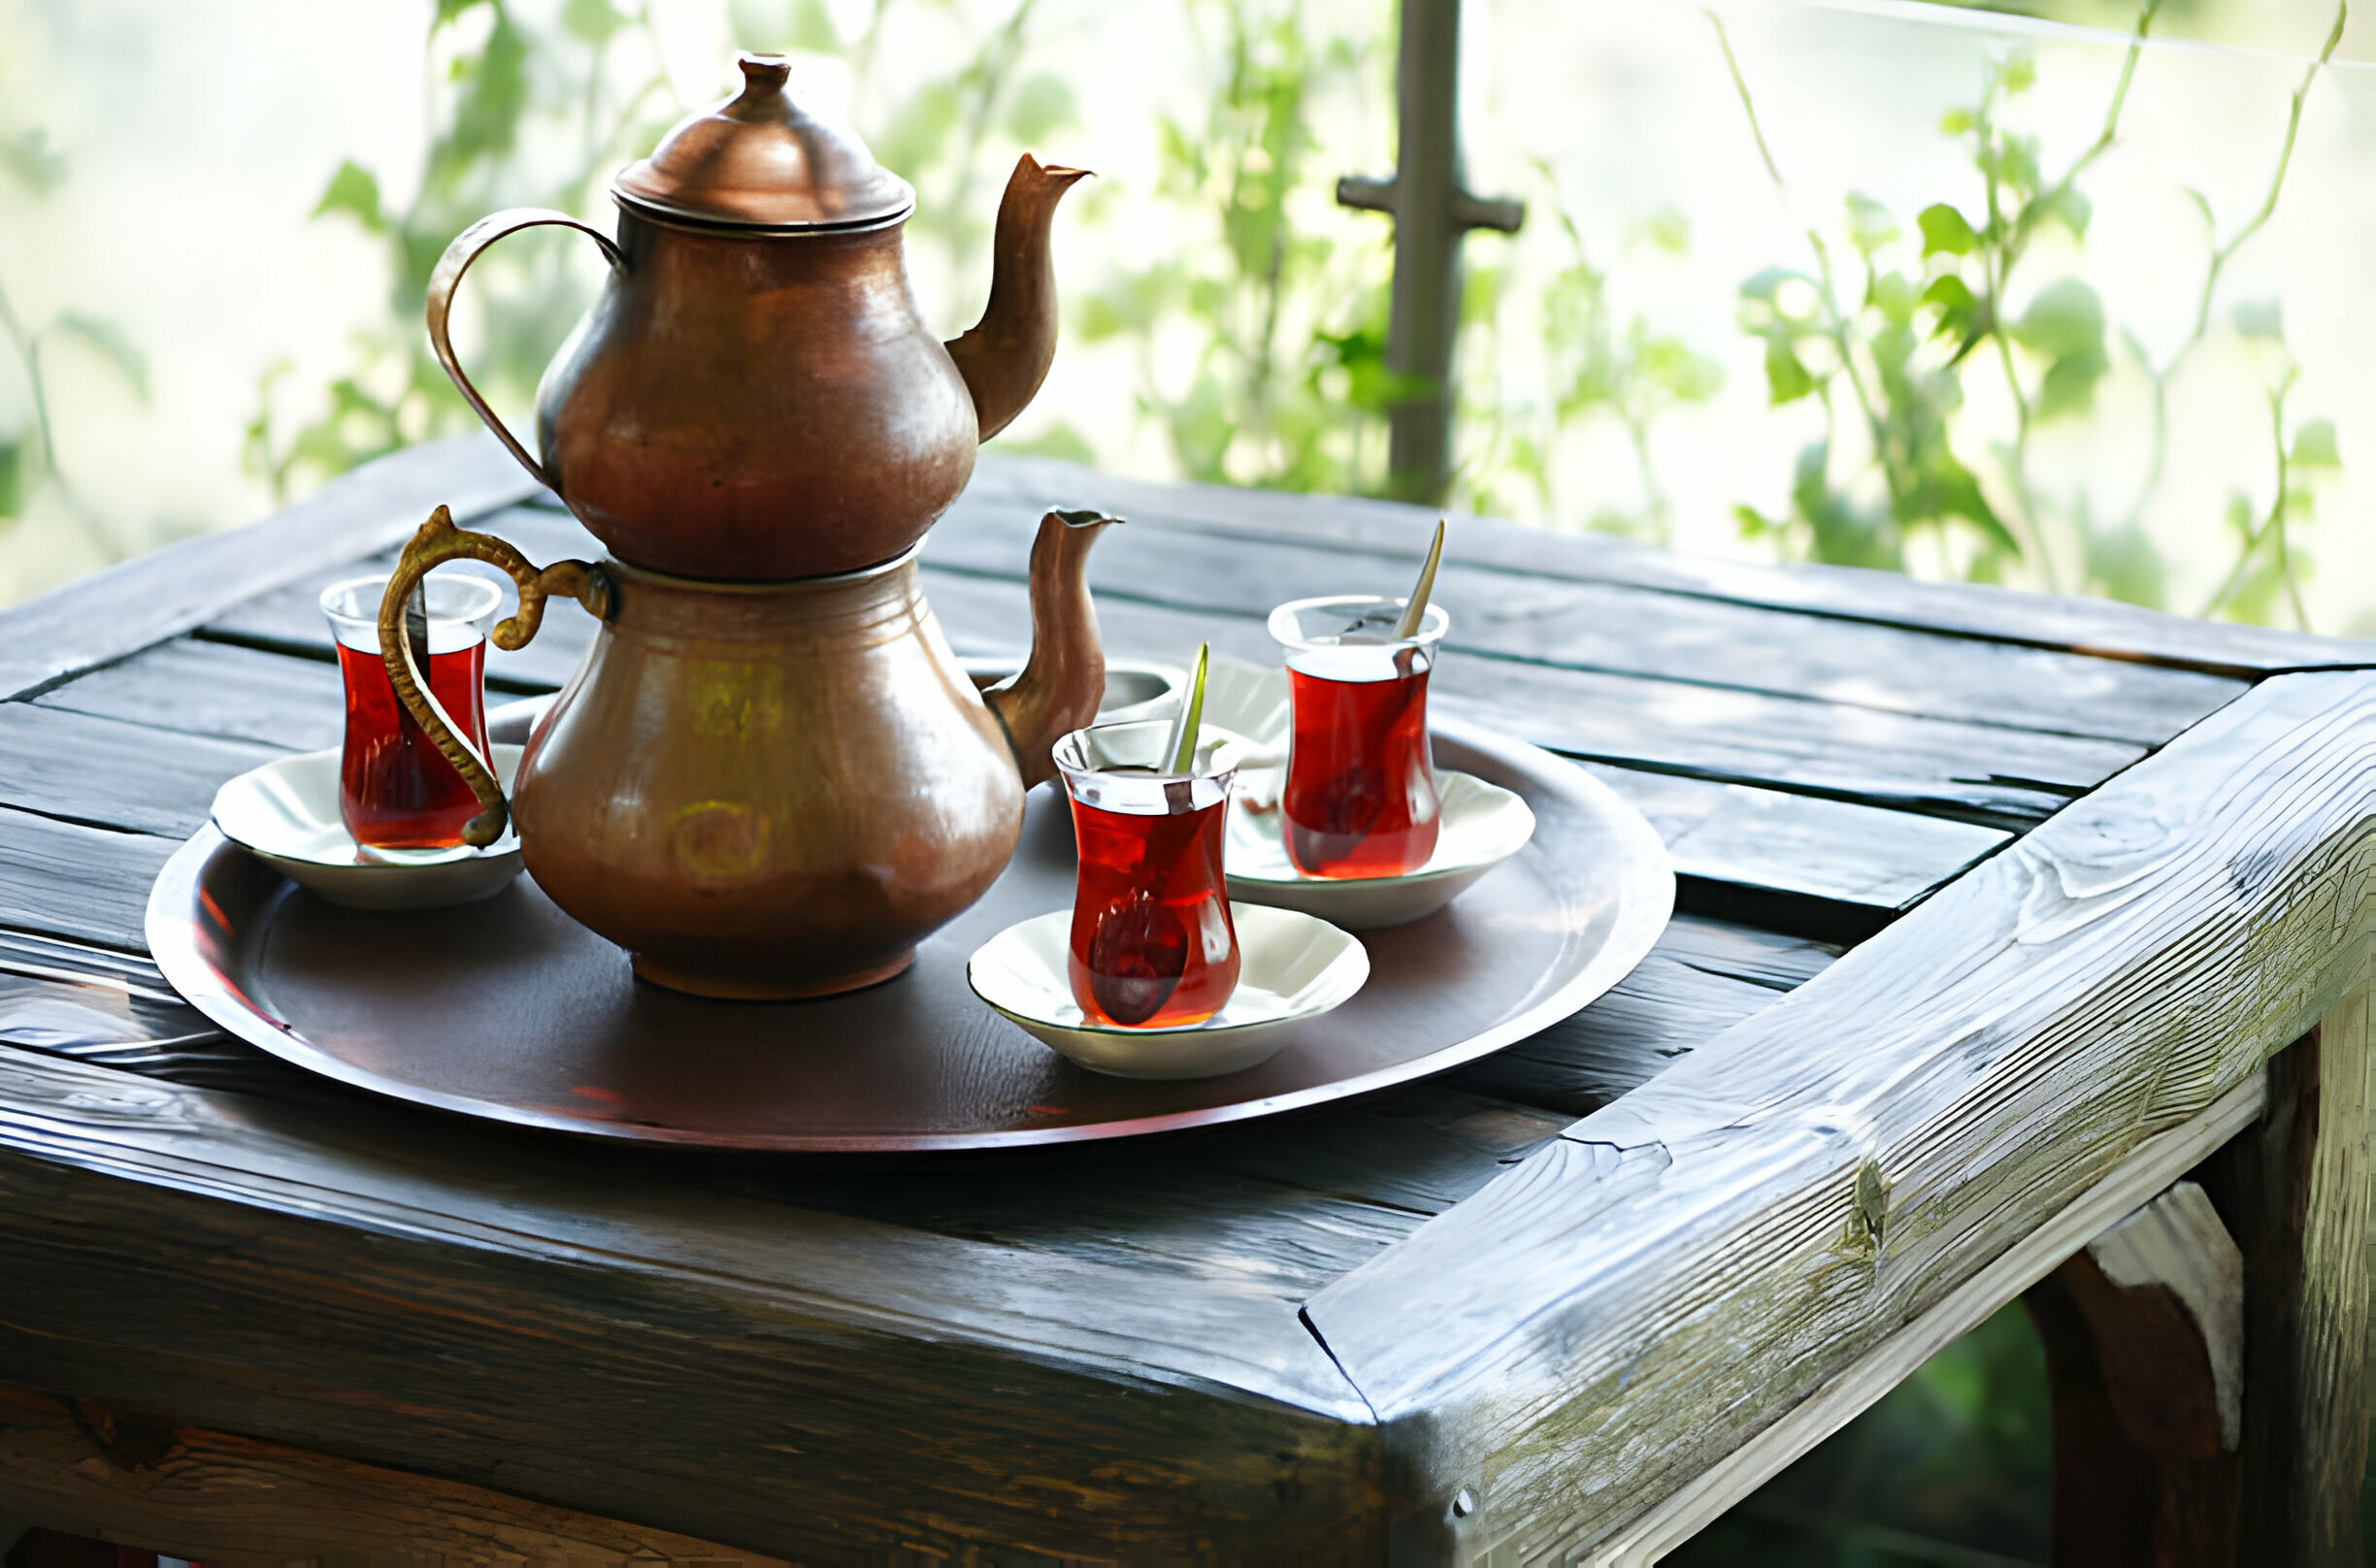 Turkish Tea Culture: The Favorite Drink of Turks